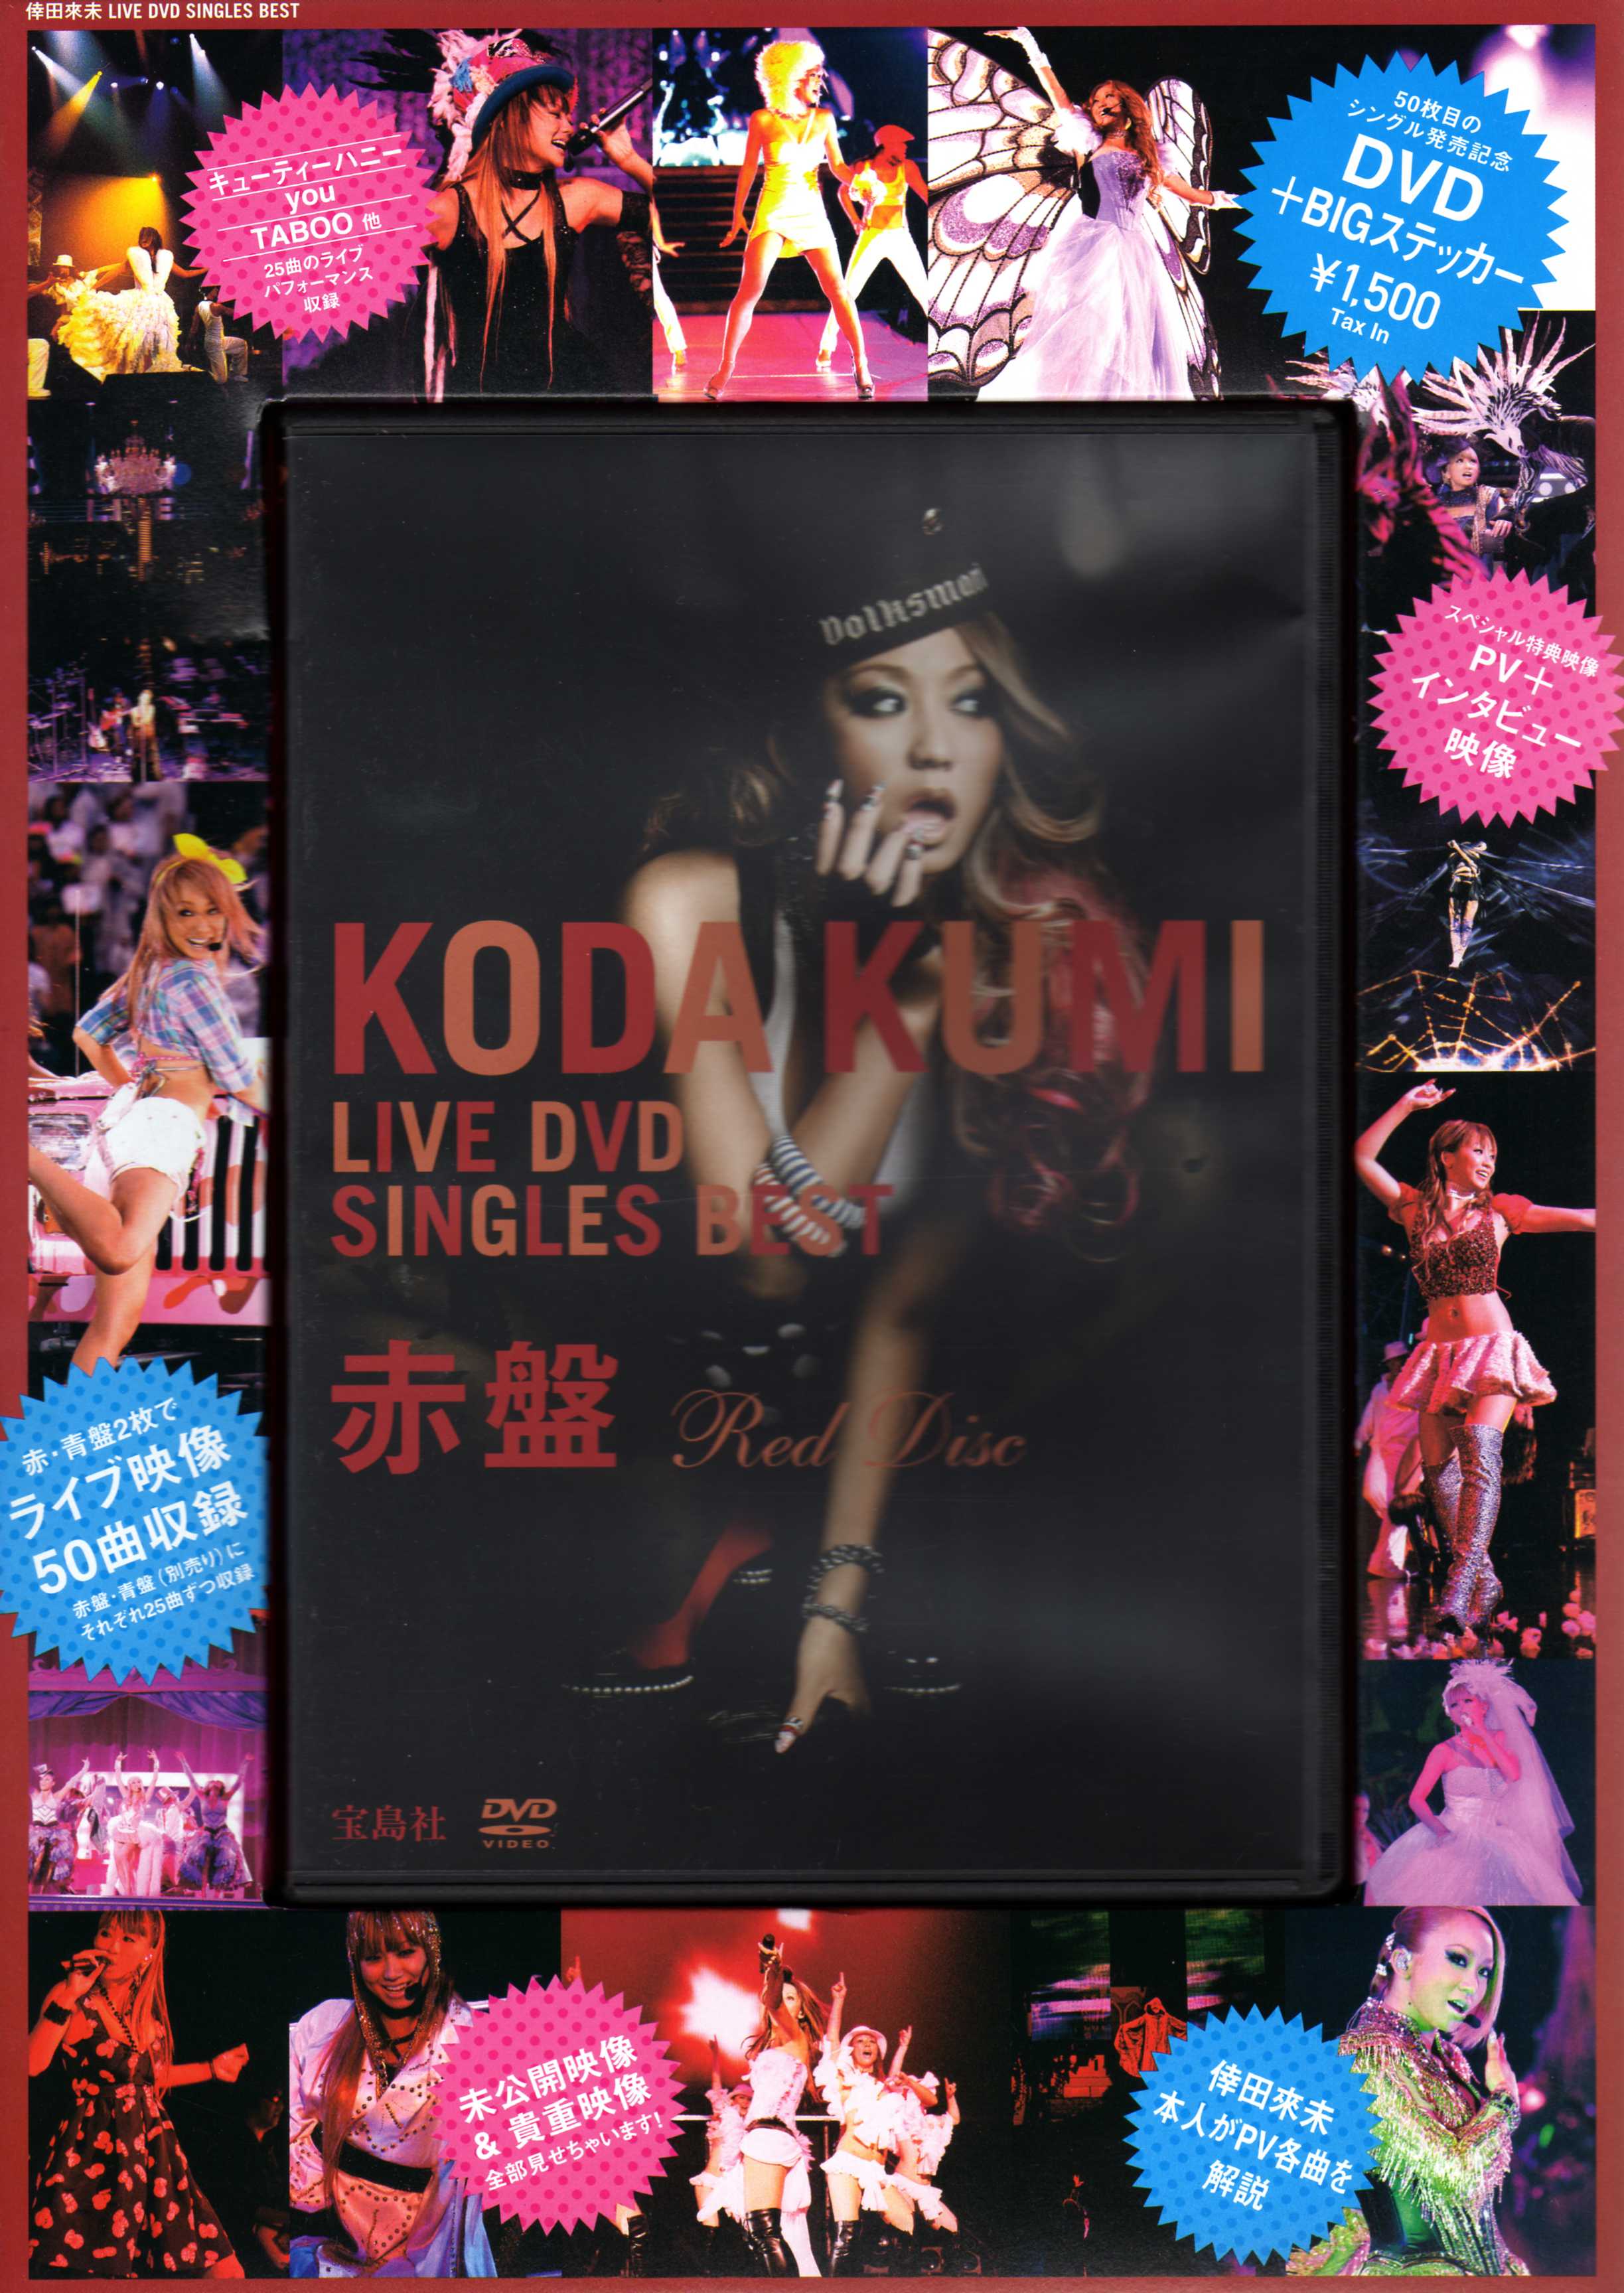 LIVE DVD SINGLES BEST -RED- (DVD)